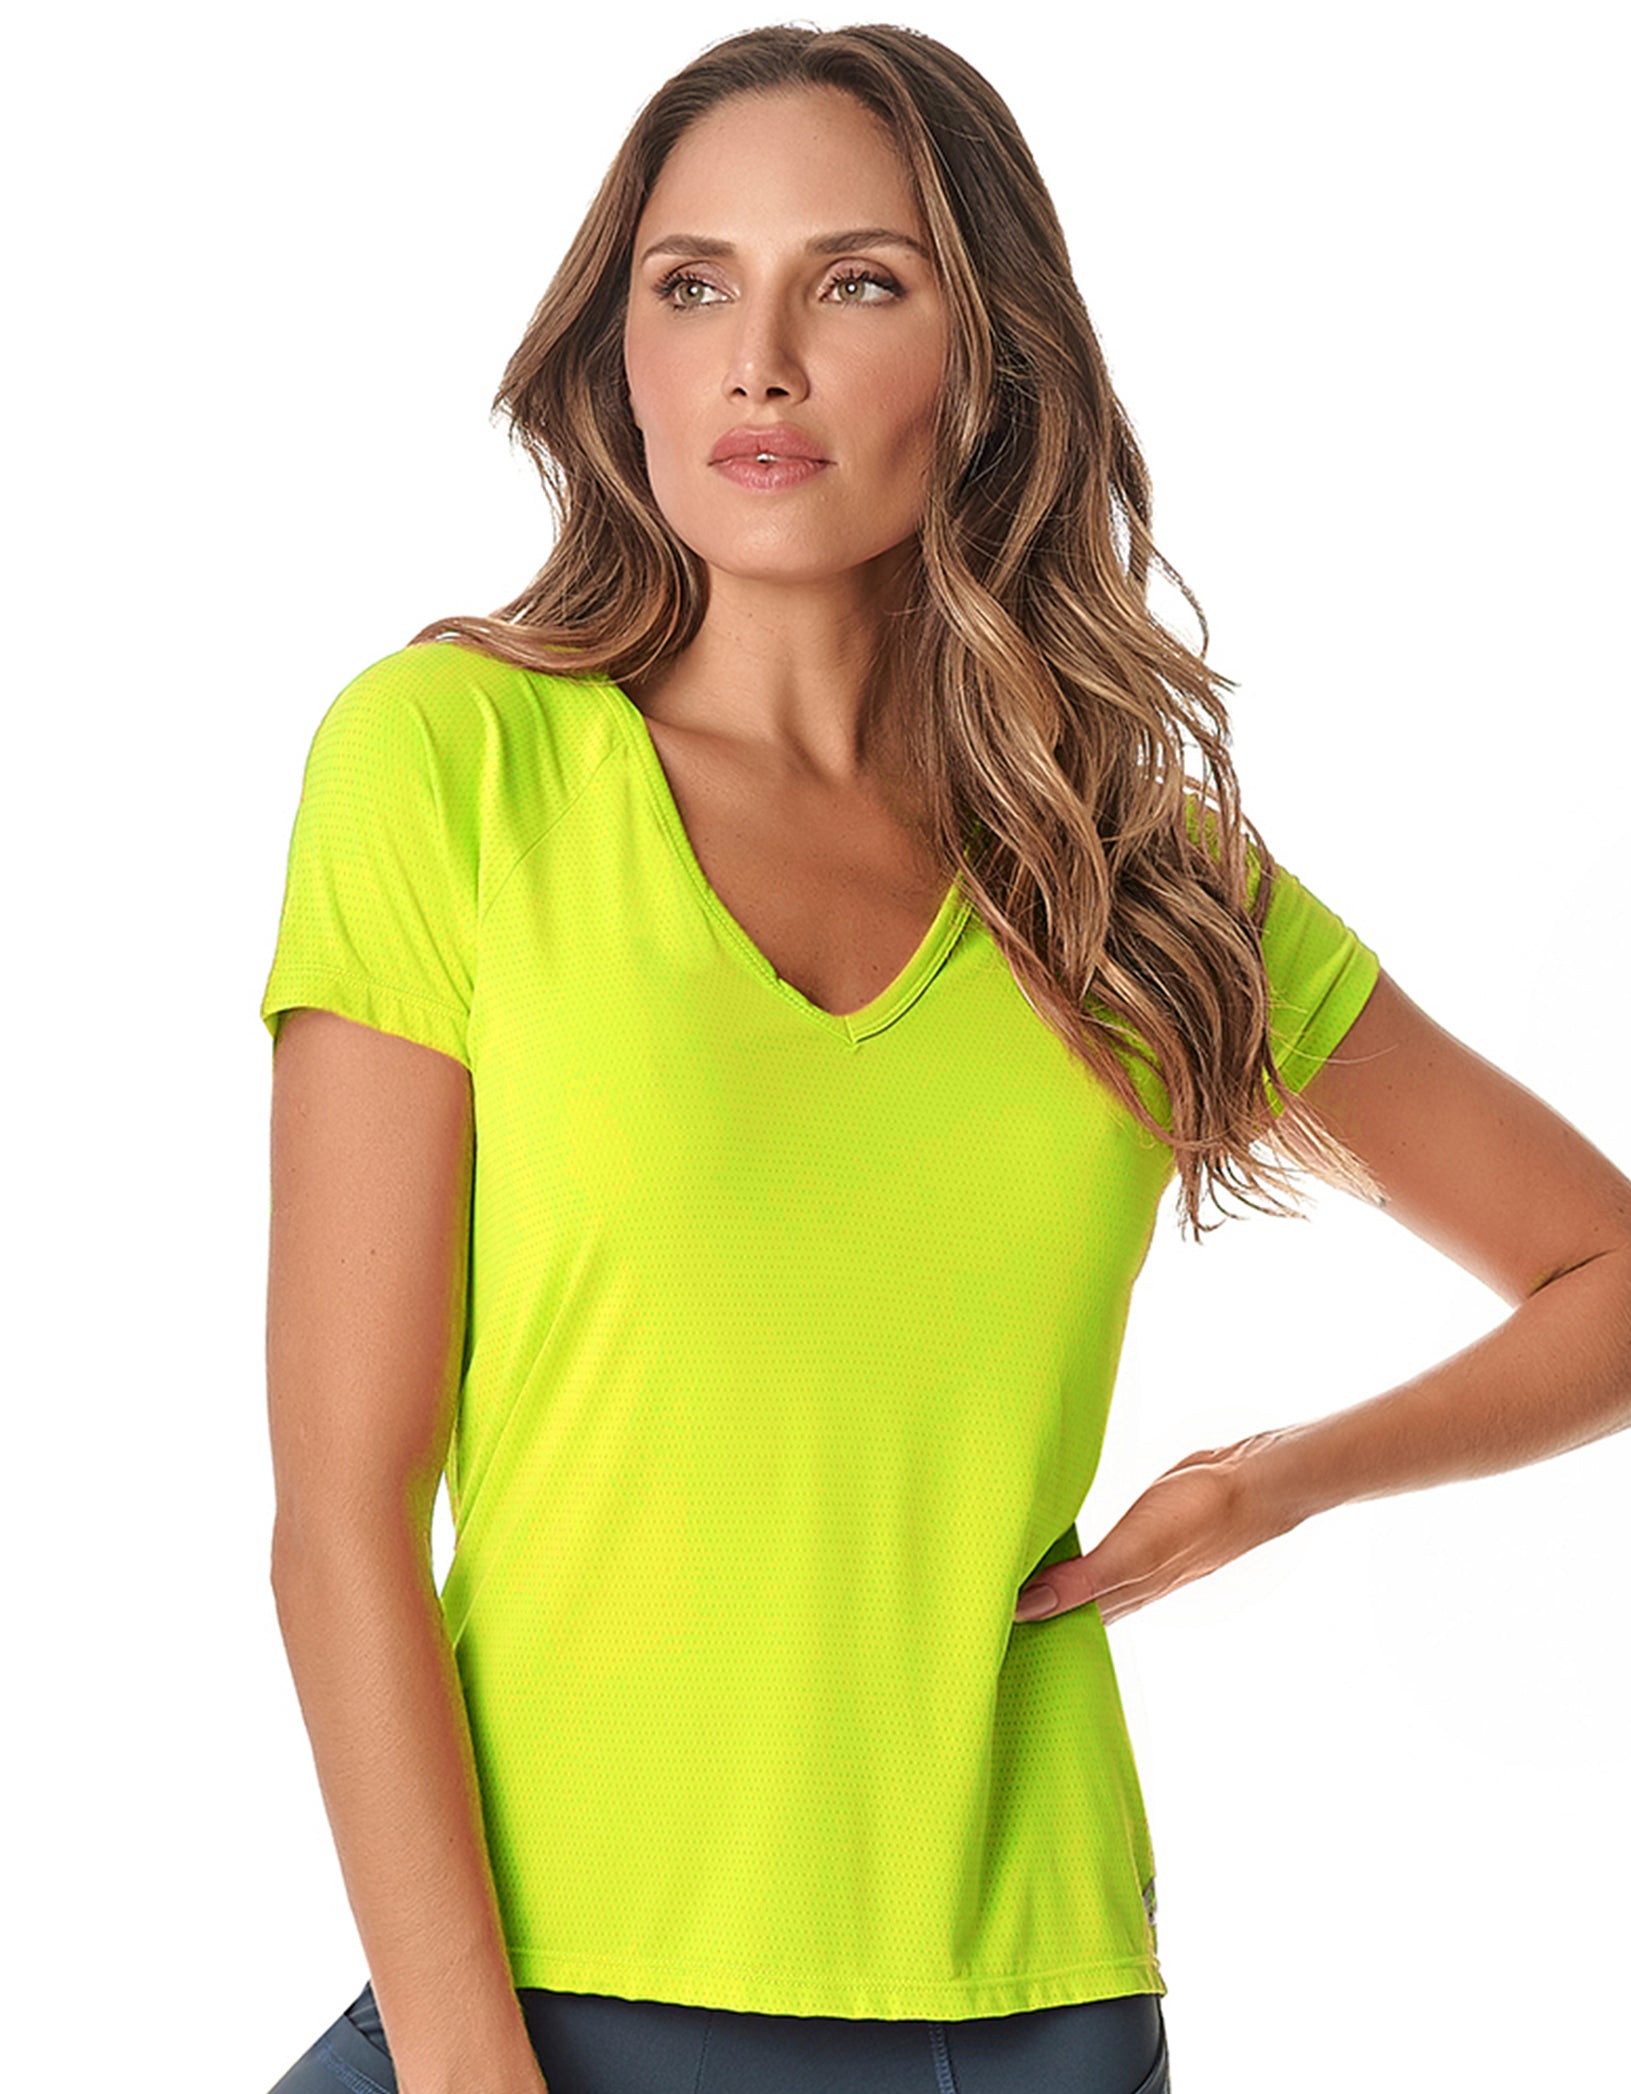 Vestem - Shirt Dry Fit Short Sleeve Only Neon Yellow - BMC328C0009